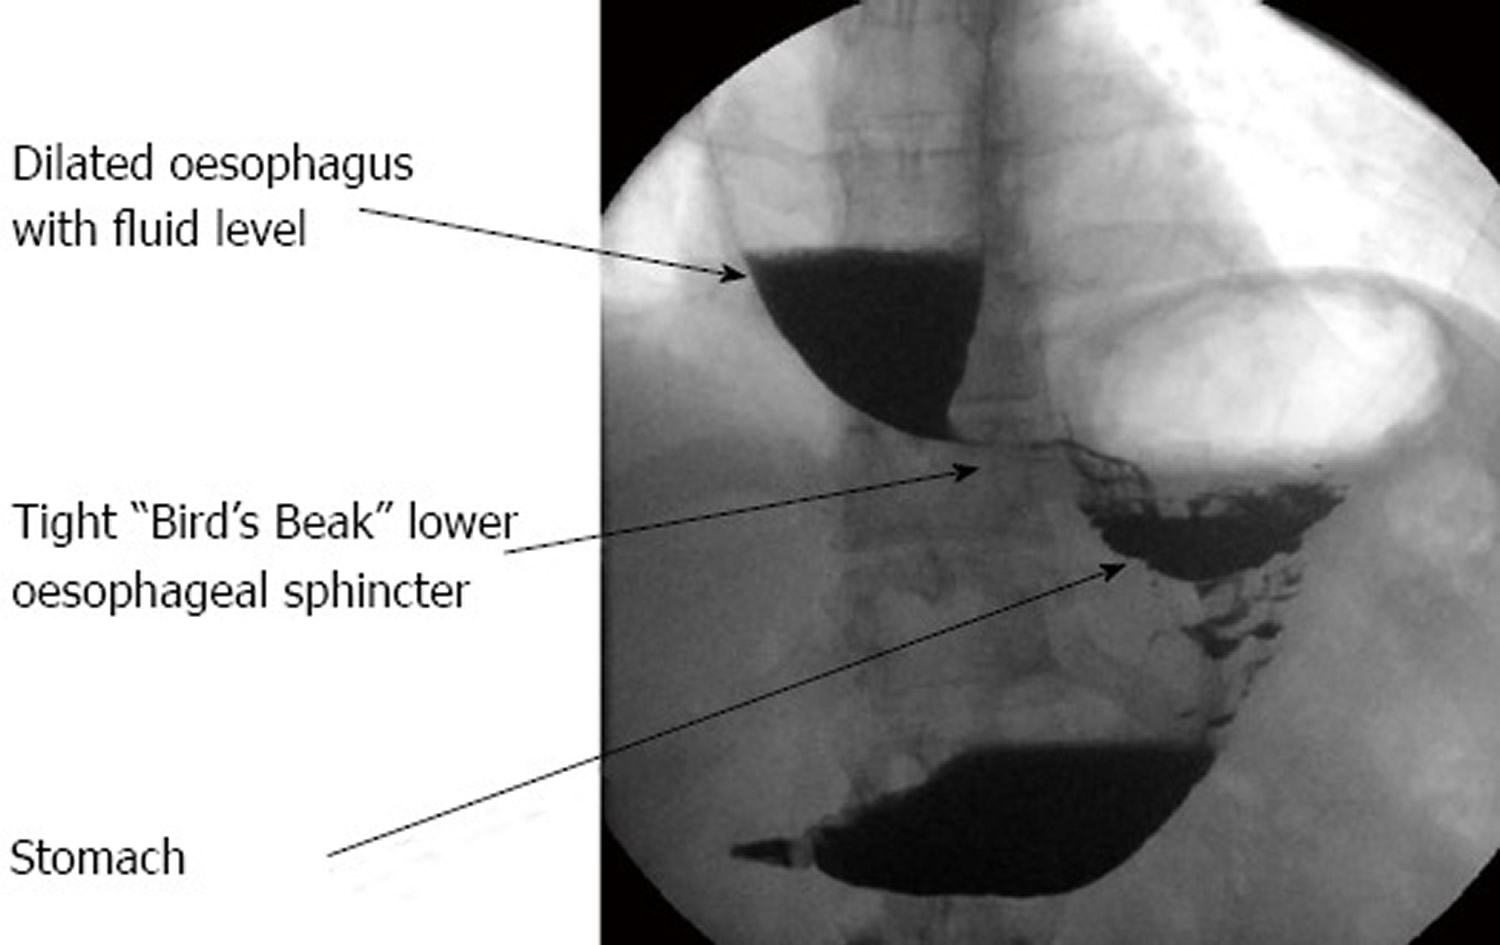 Barium swallow demonstrating achalasia